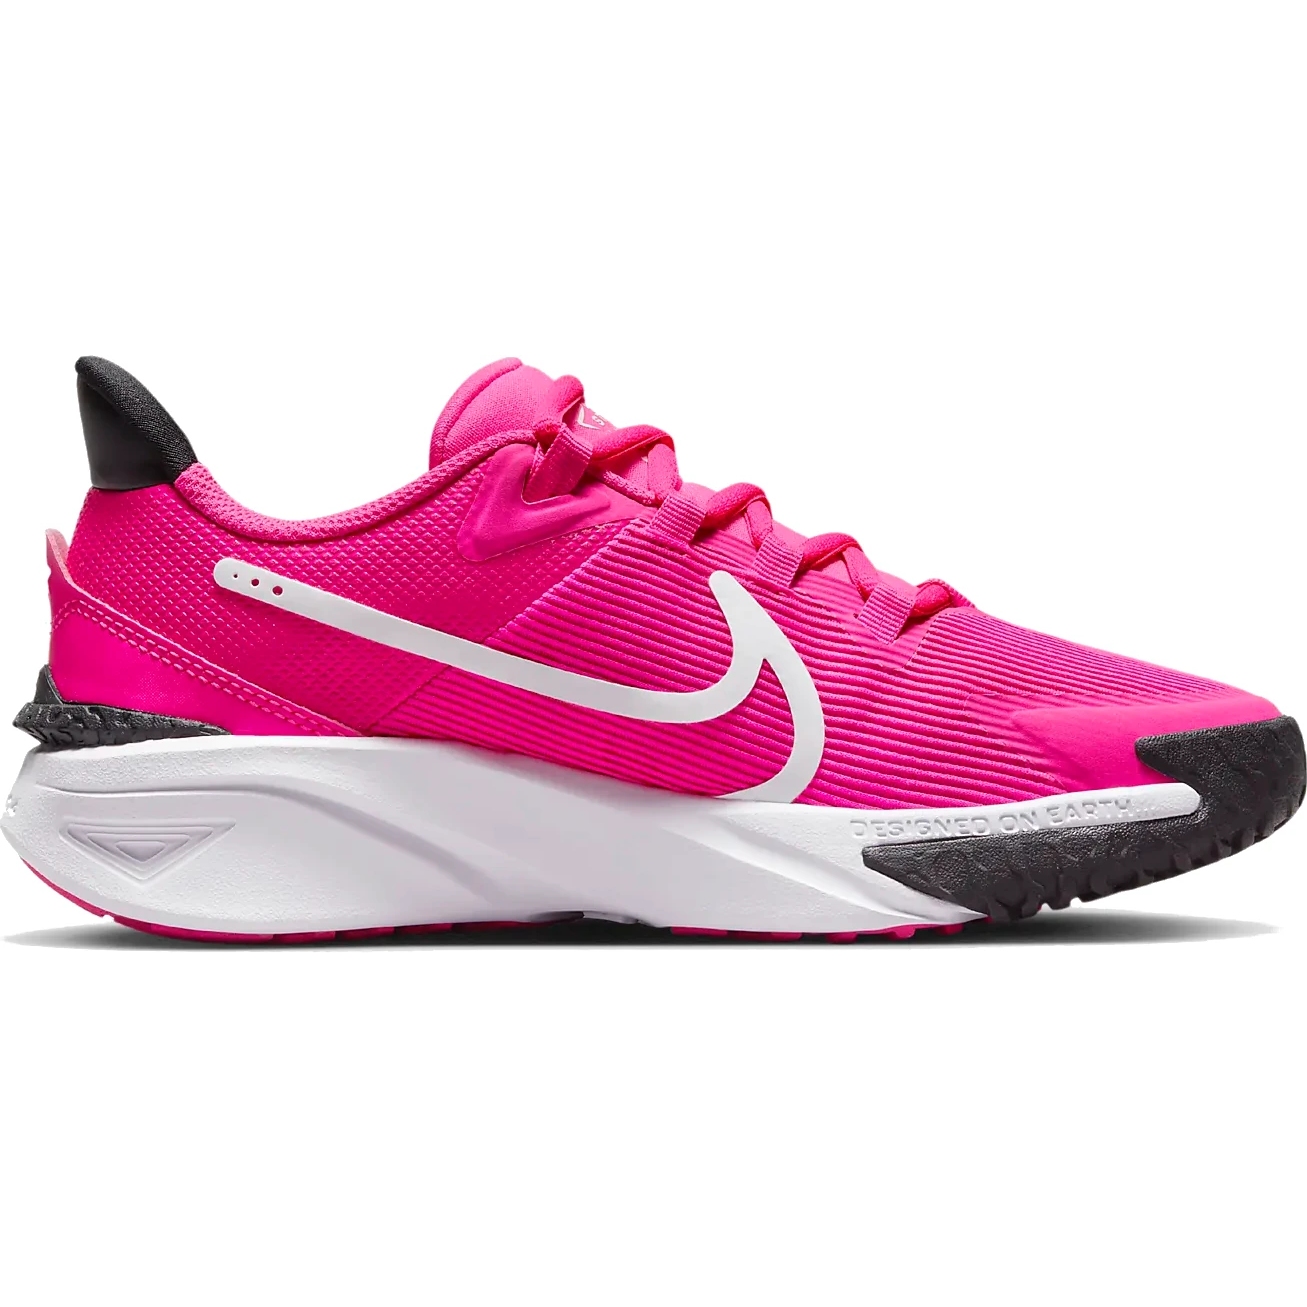 Immagine prodotto da Nike Scarpe Bambini - Star Runner 4 - fierce pink/black-white DX7615-601